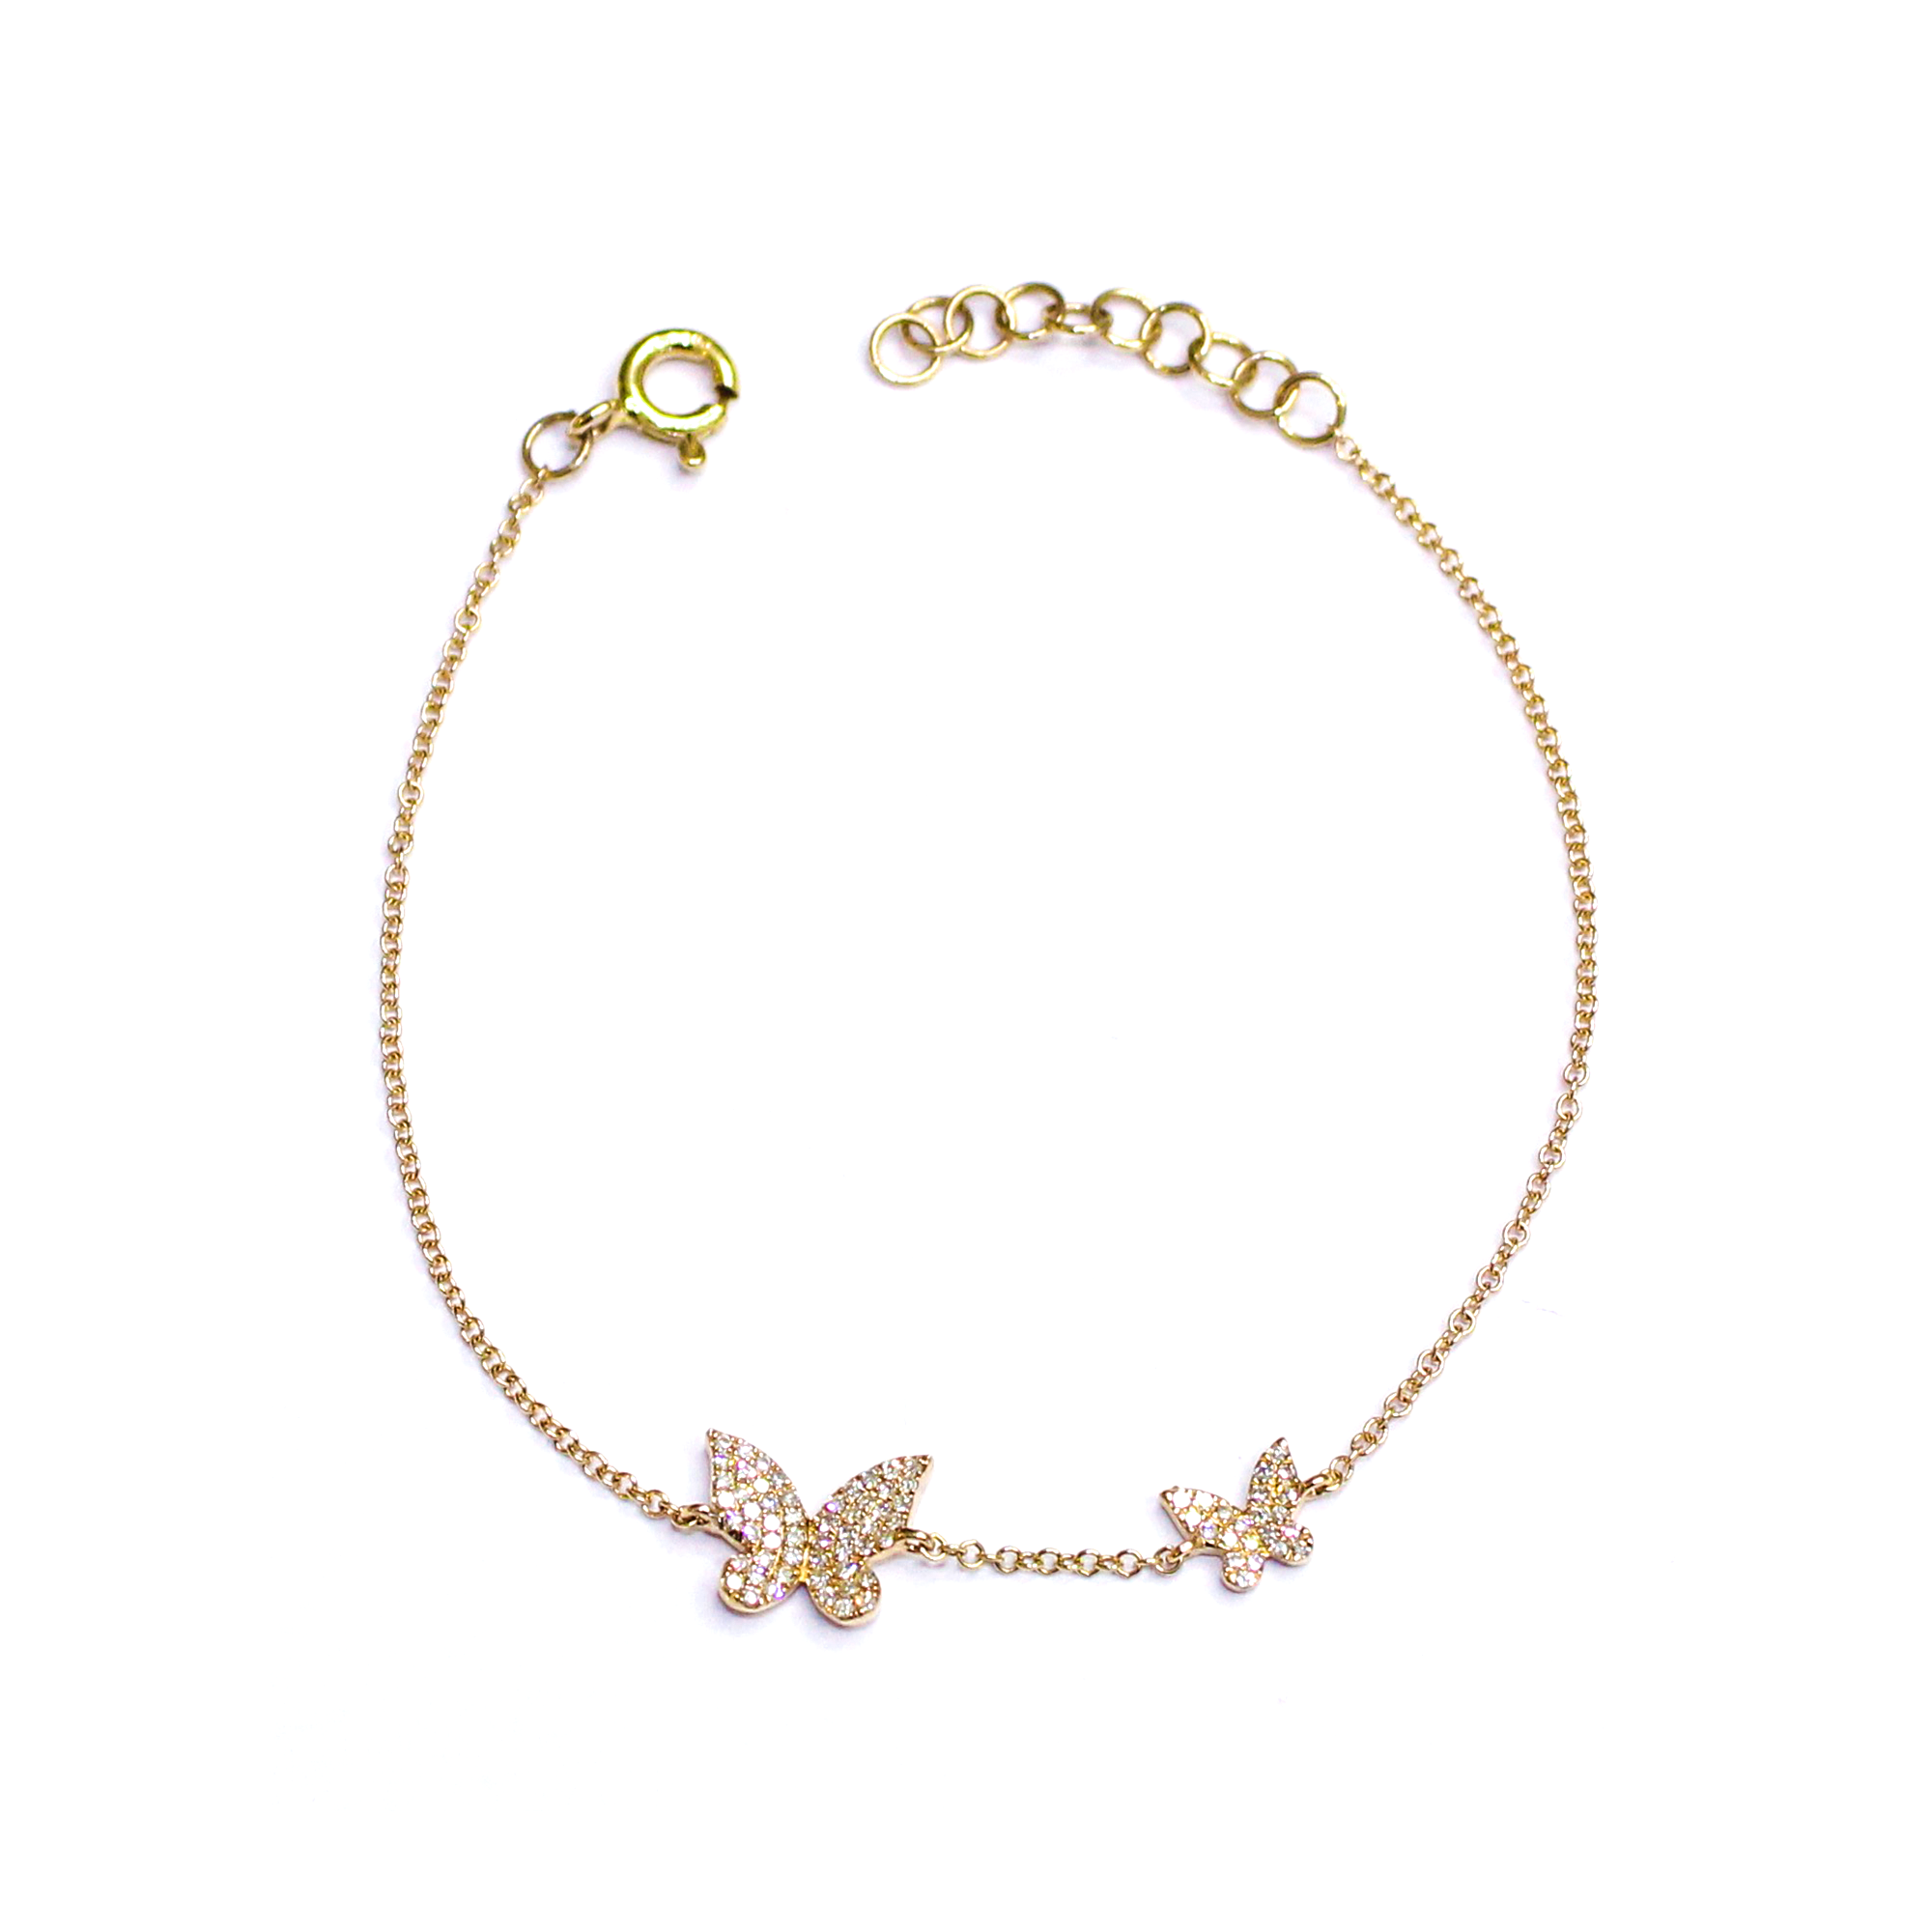 Dengmore Valentine's Day Butterfly Charm Bracelet Lovers' Bracelet